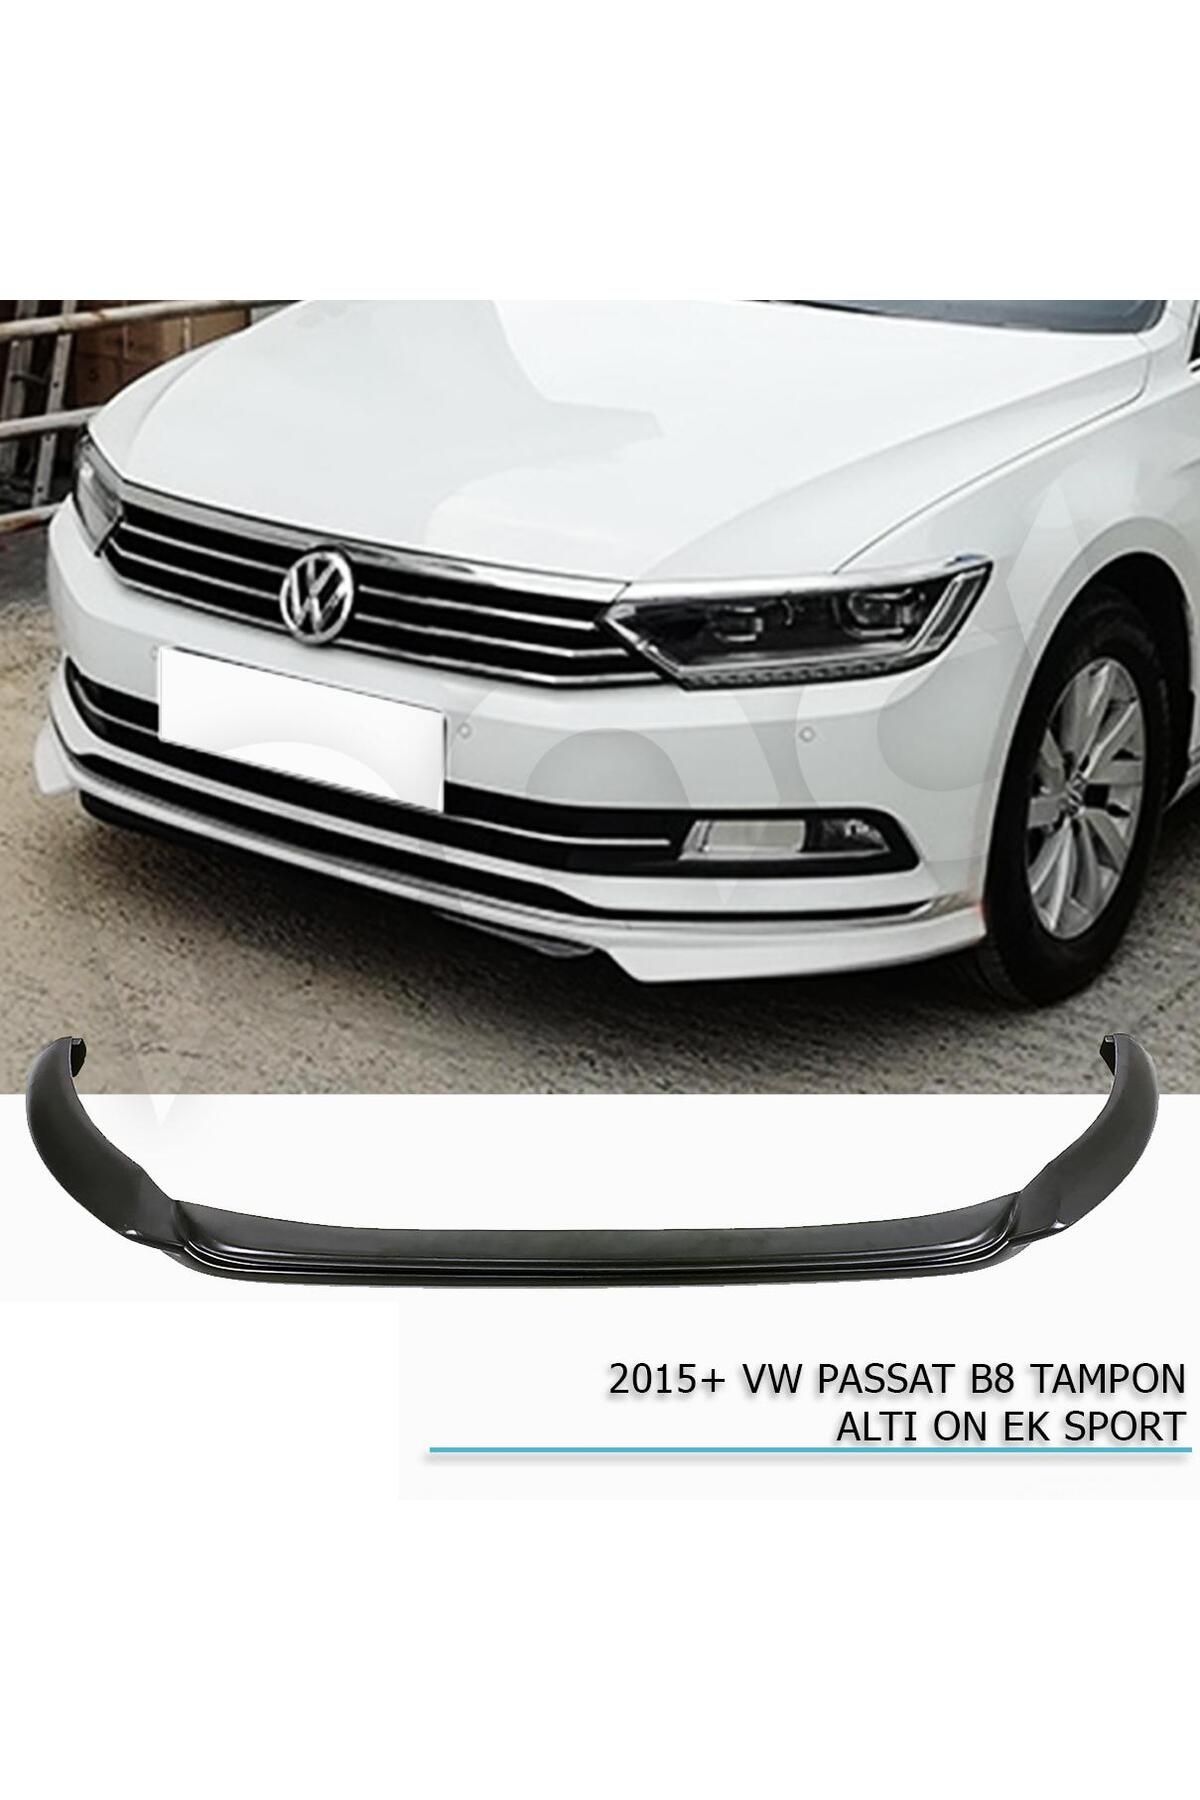 TayFa Otomopa 2015+ VW PASSAT B8 TAMPON ALTI ON EK SPORT - Üretici Firma : FORM VAKUM